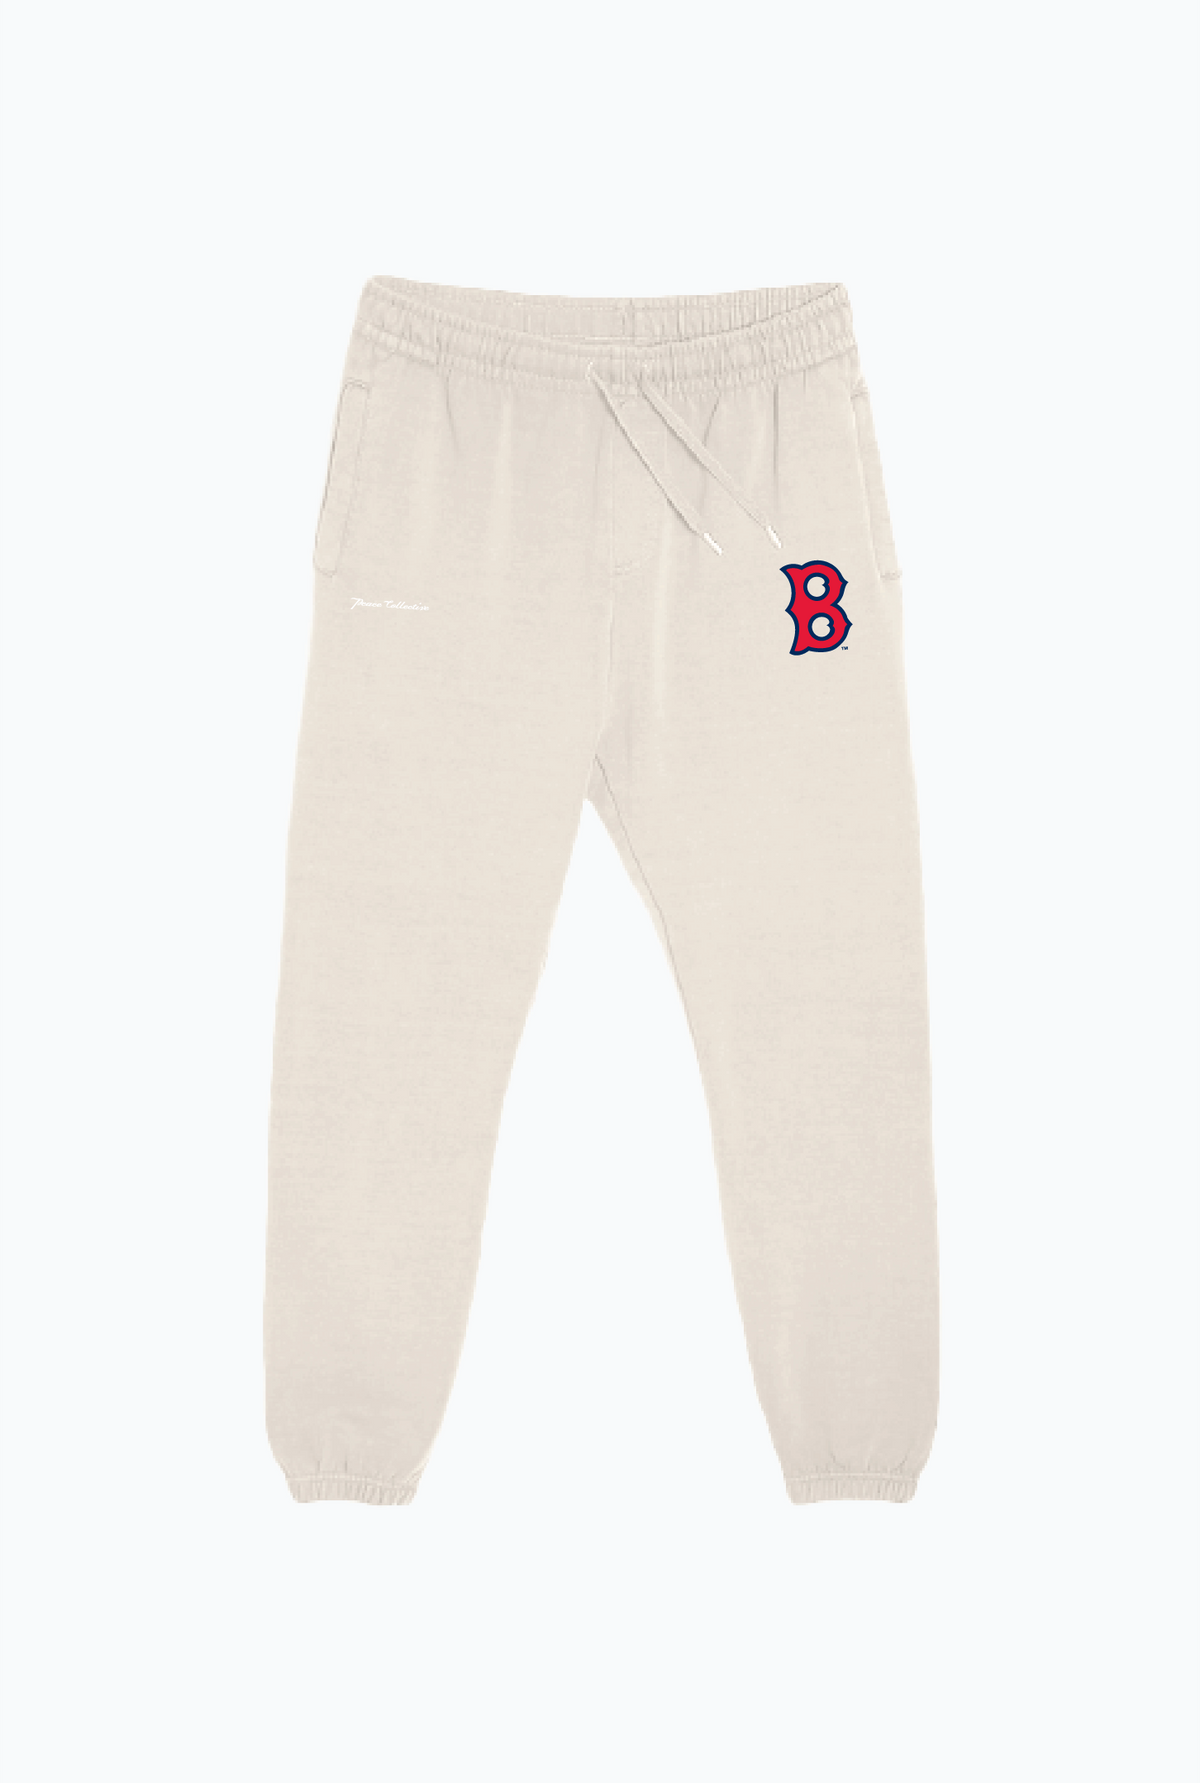 Boston Red Sox Heavyweight Jogger - Ivory